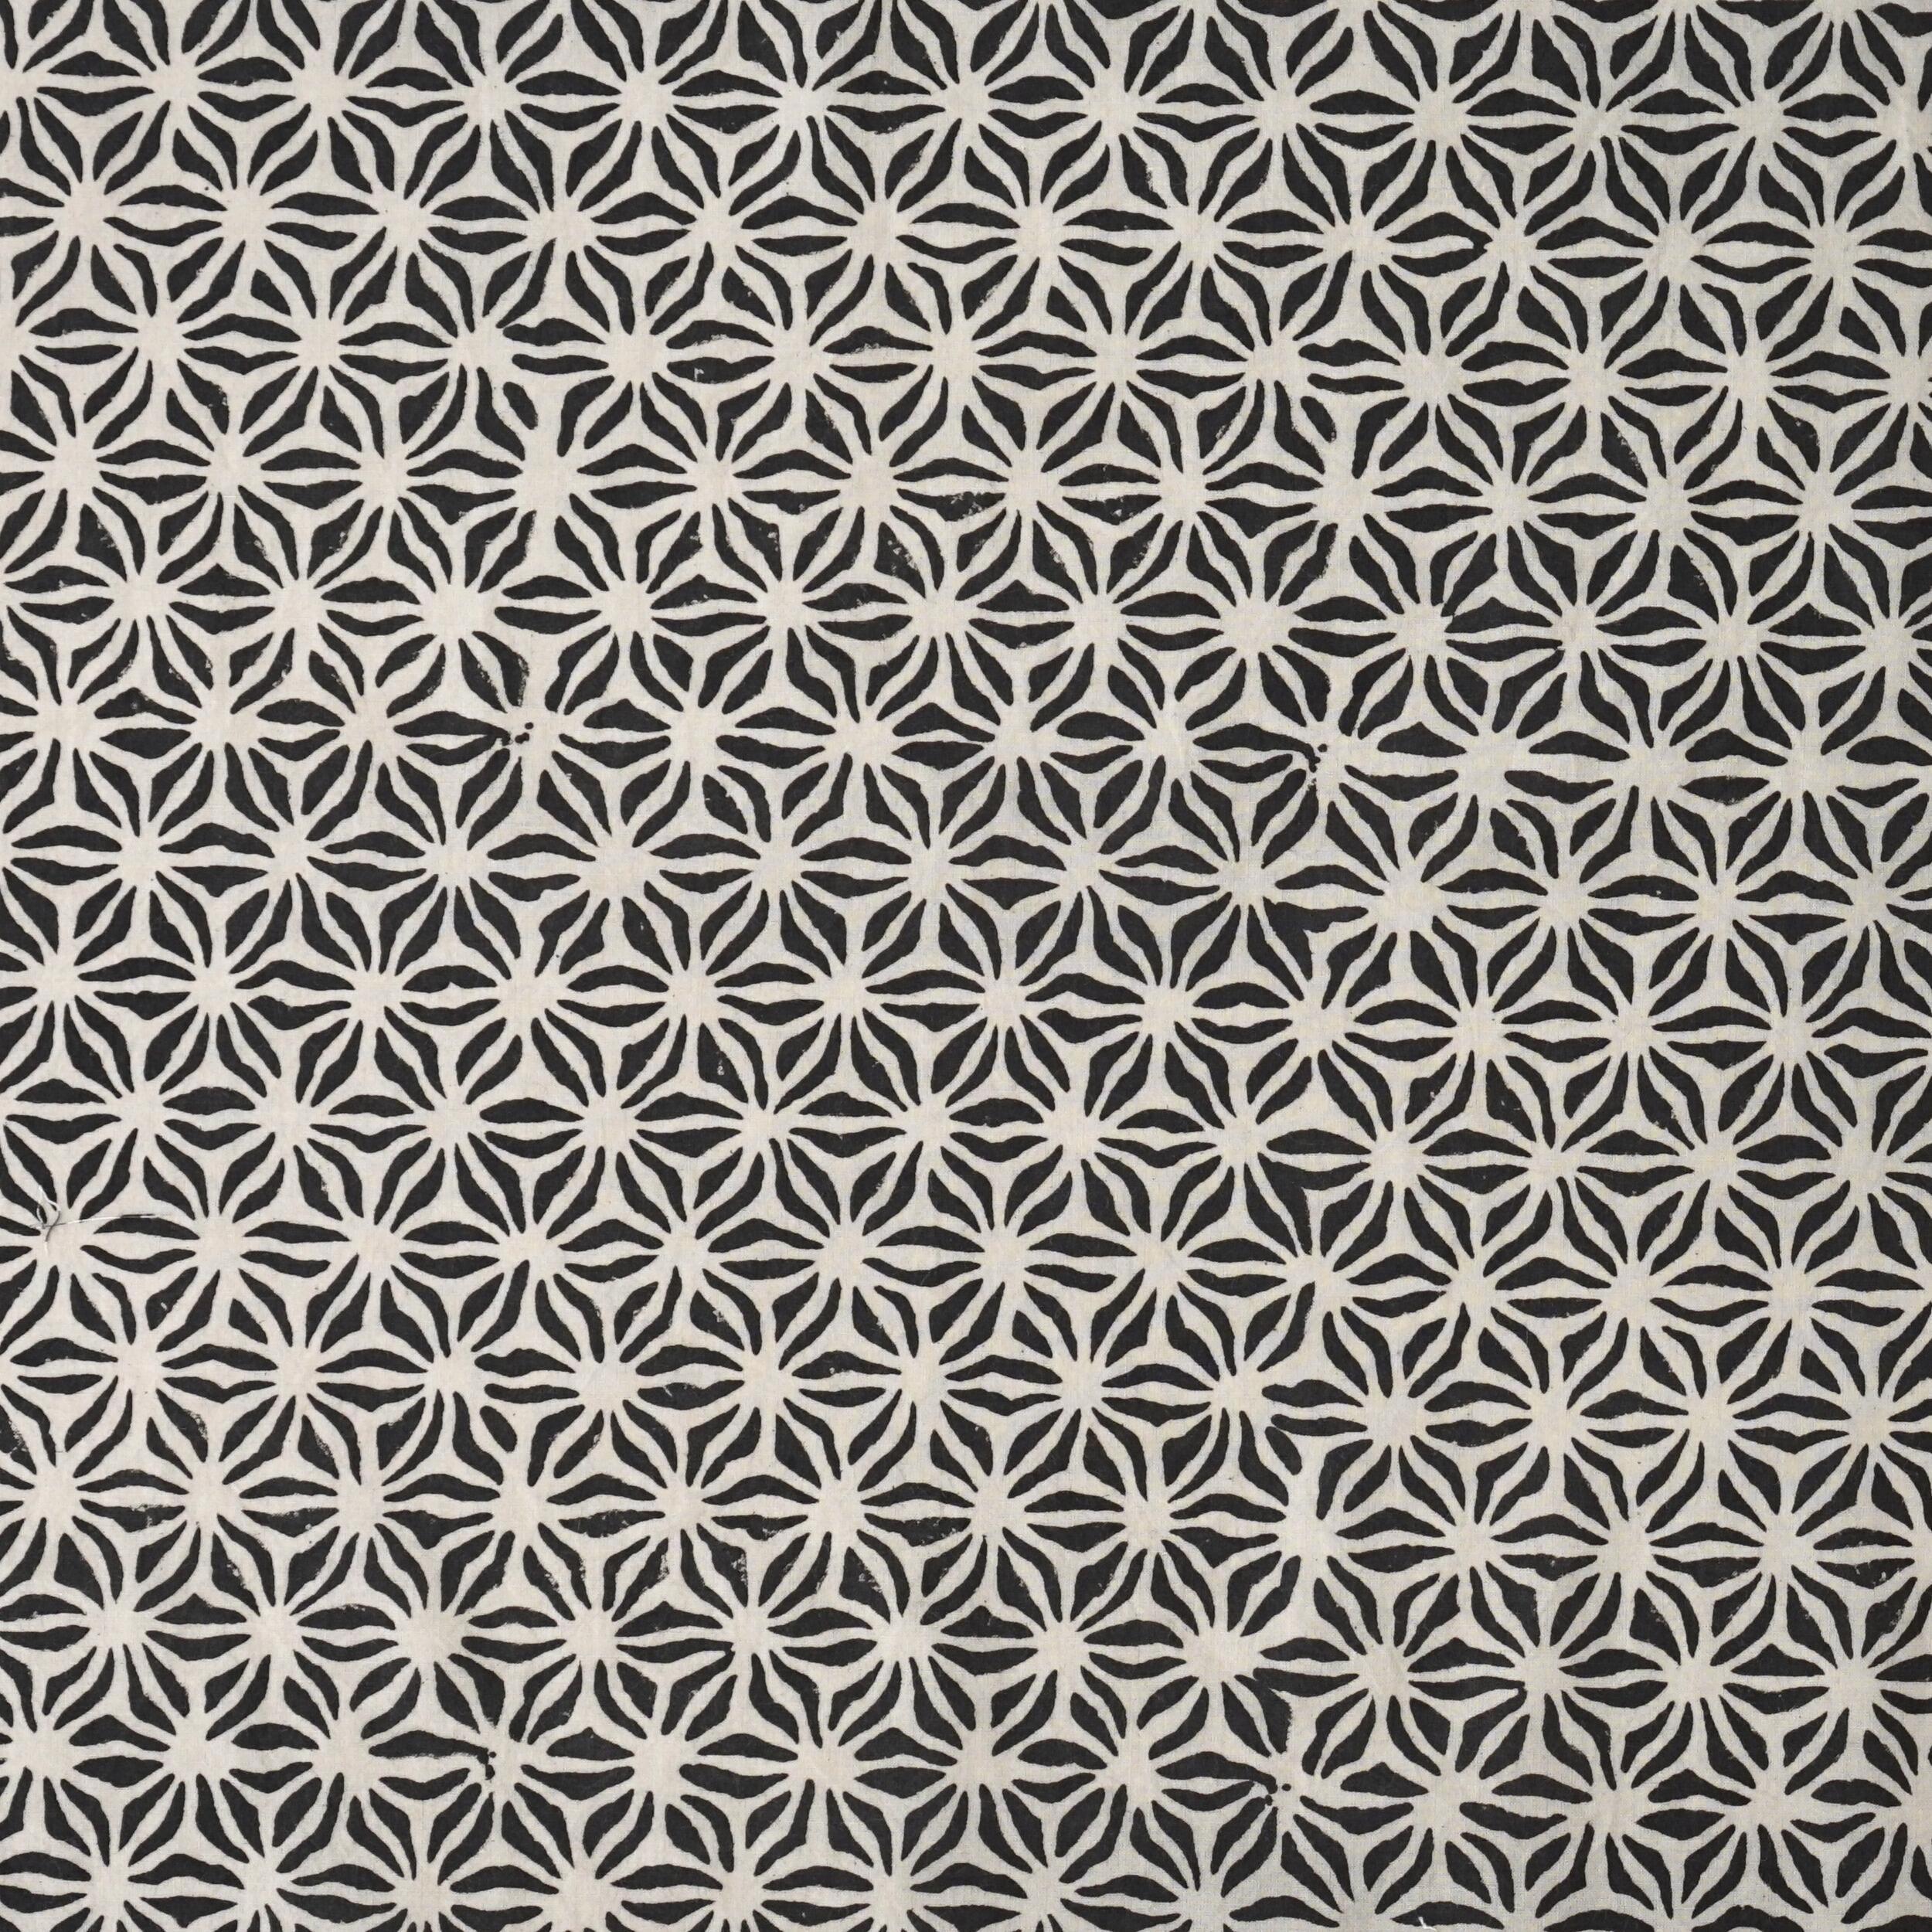 SIK20 - Block-Printed Cotton Fabric - Starfish Design - Black Iron Dye - Flat